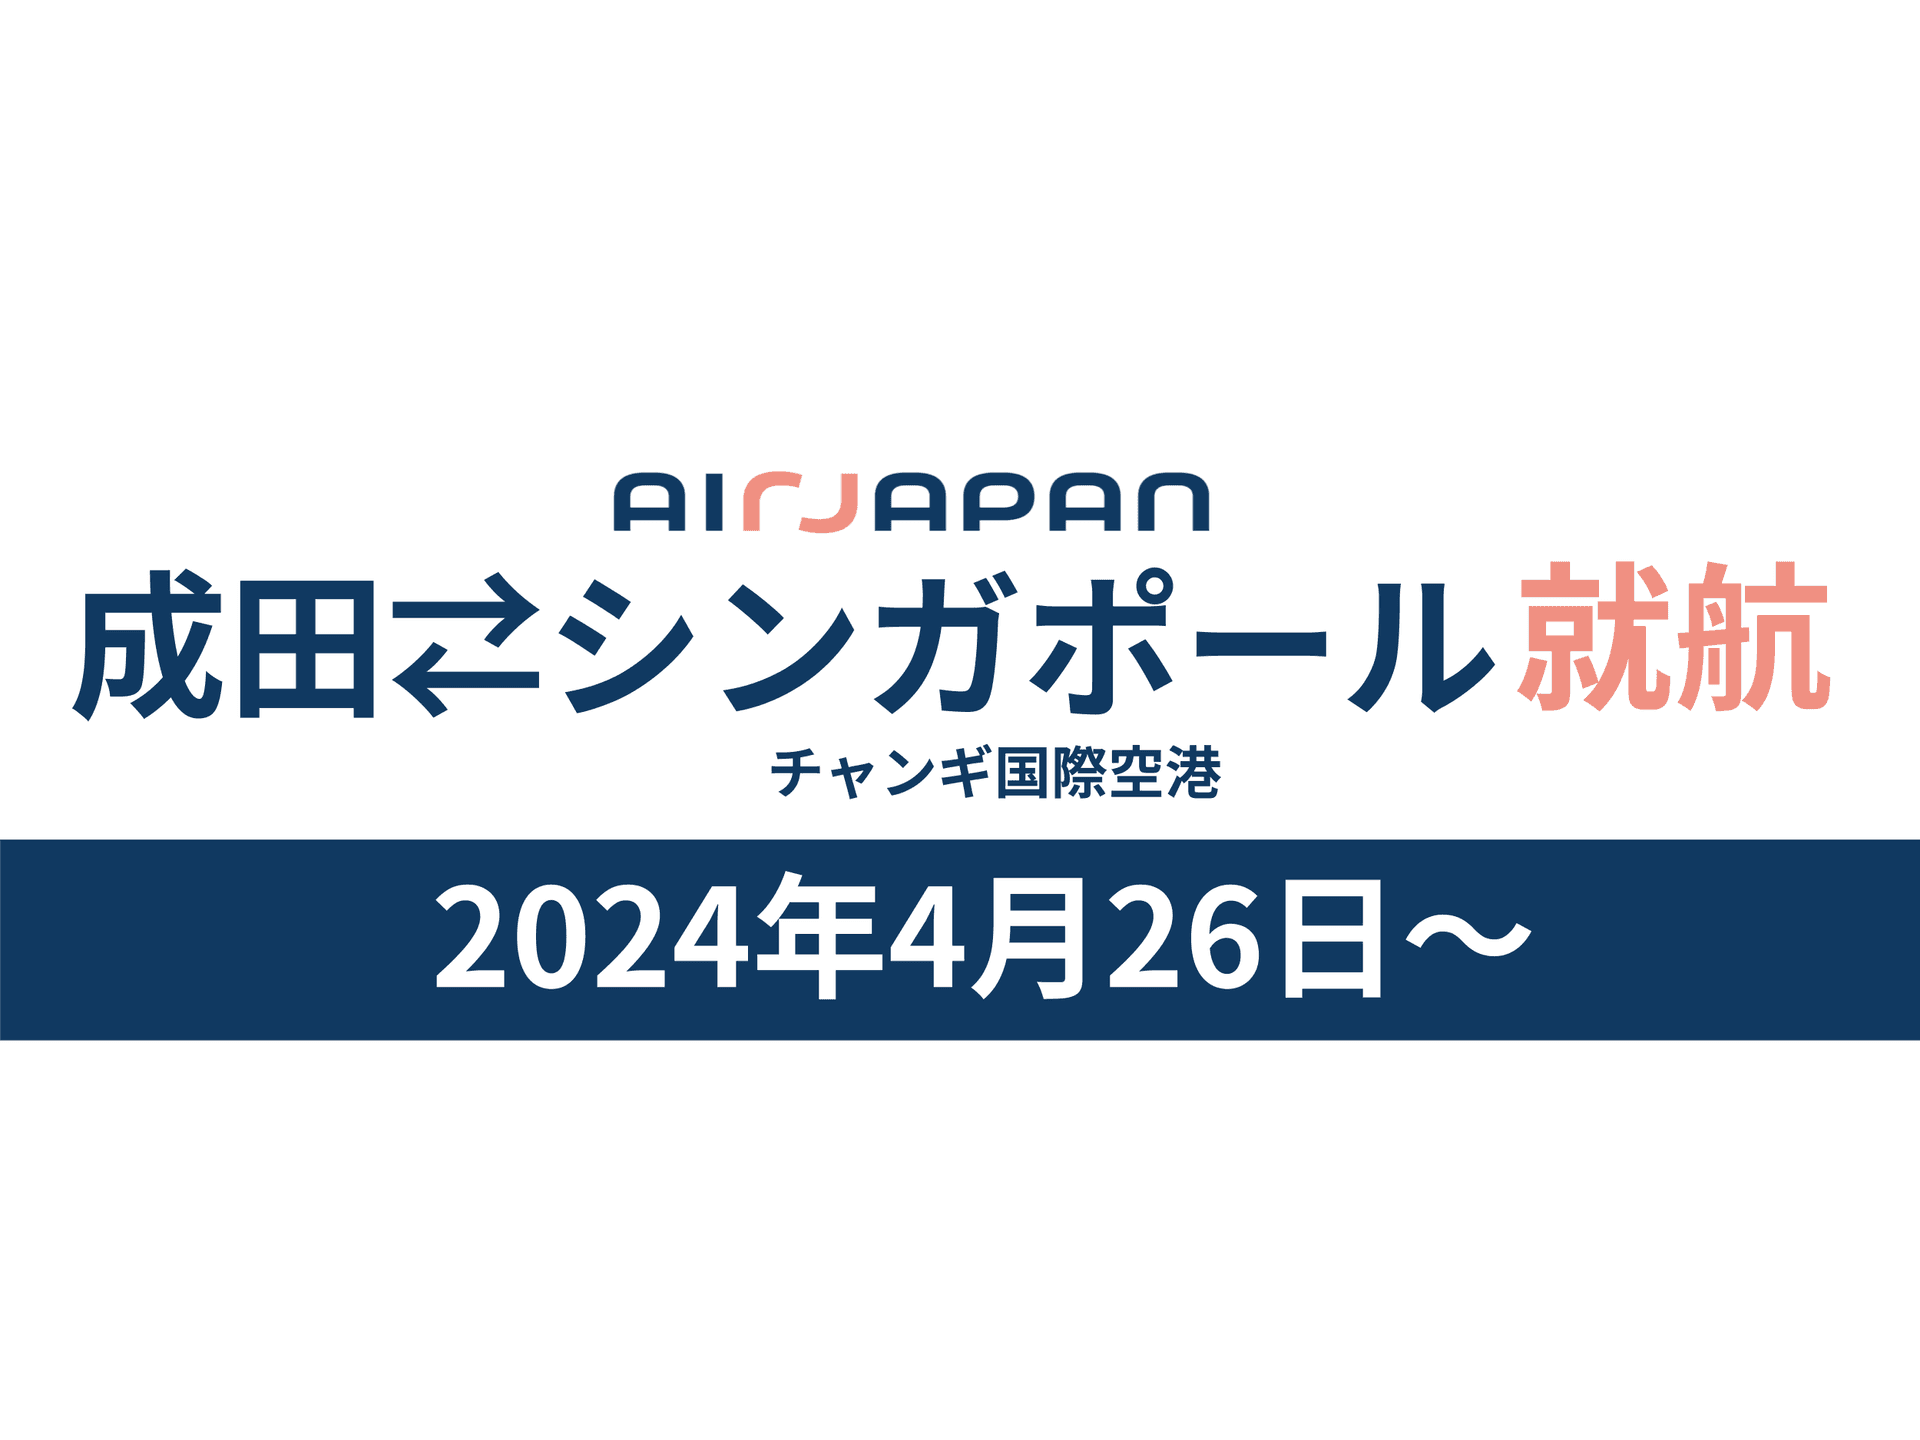 AirJapanは成田 シンガポールに2024年4月26日より就航します。